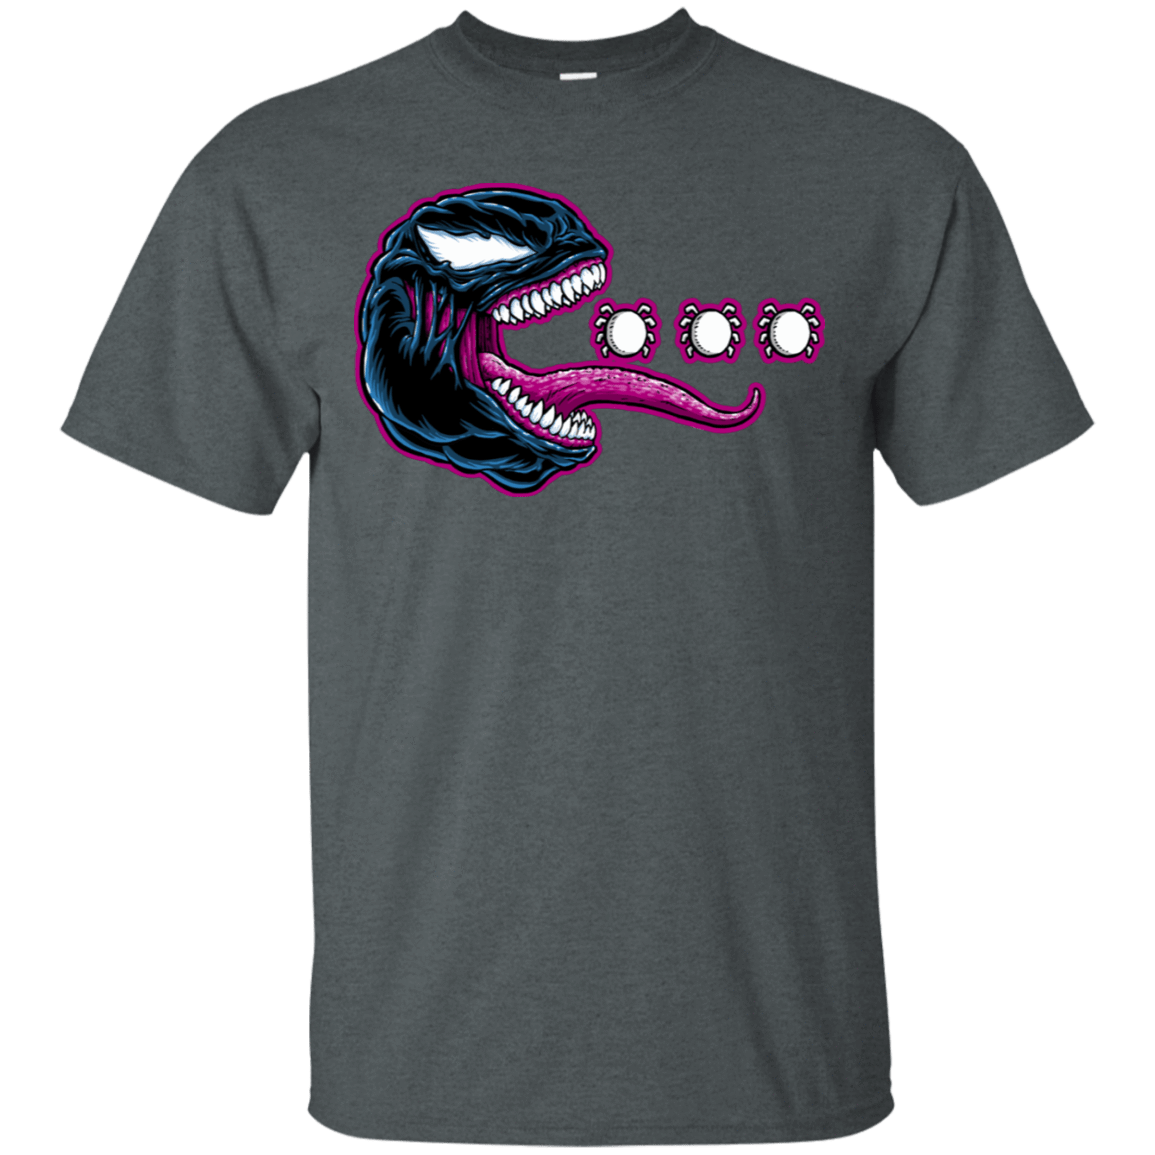 T-Shirts Dark Heather / S Pac Venom T-Shirt